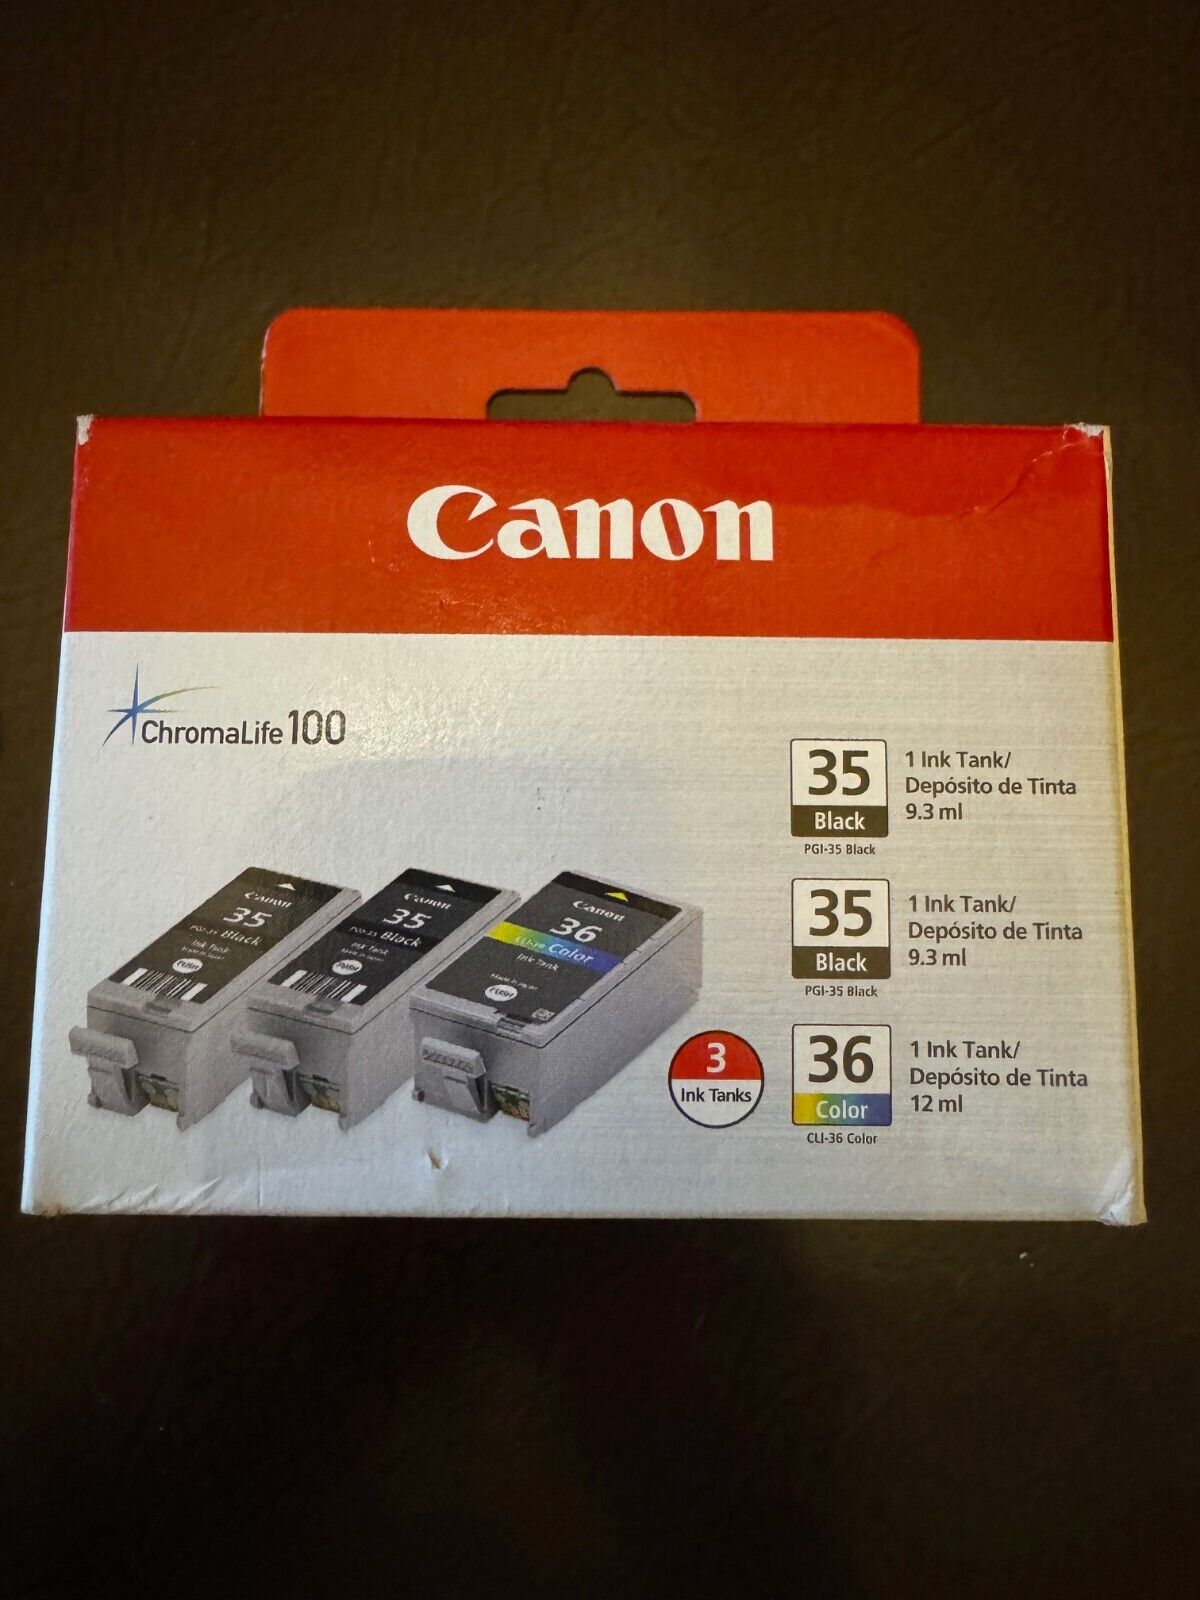 Canon ChromaLife 100 35-Black/35-Black/36-Color ink cartridges